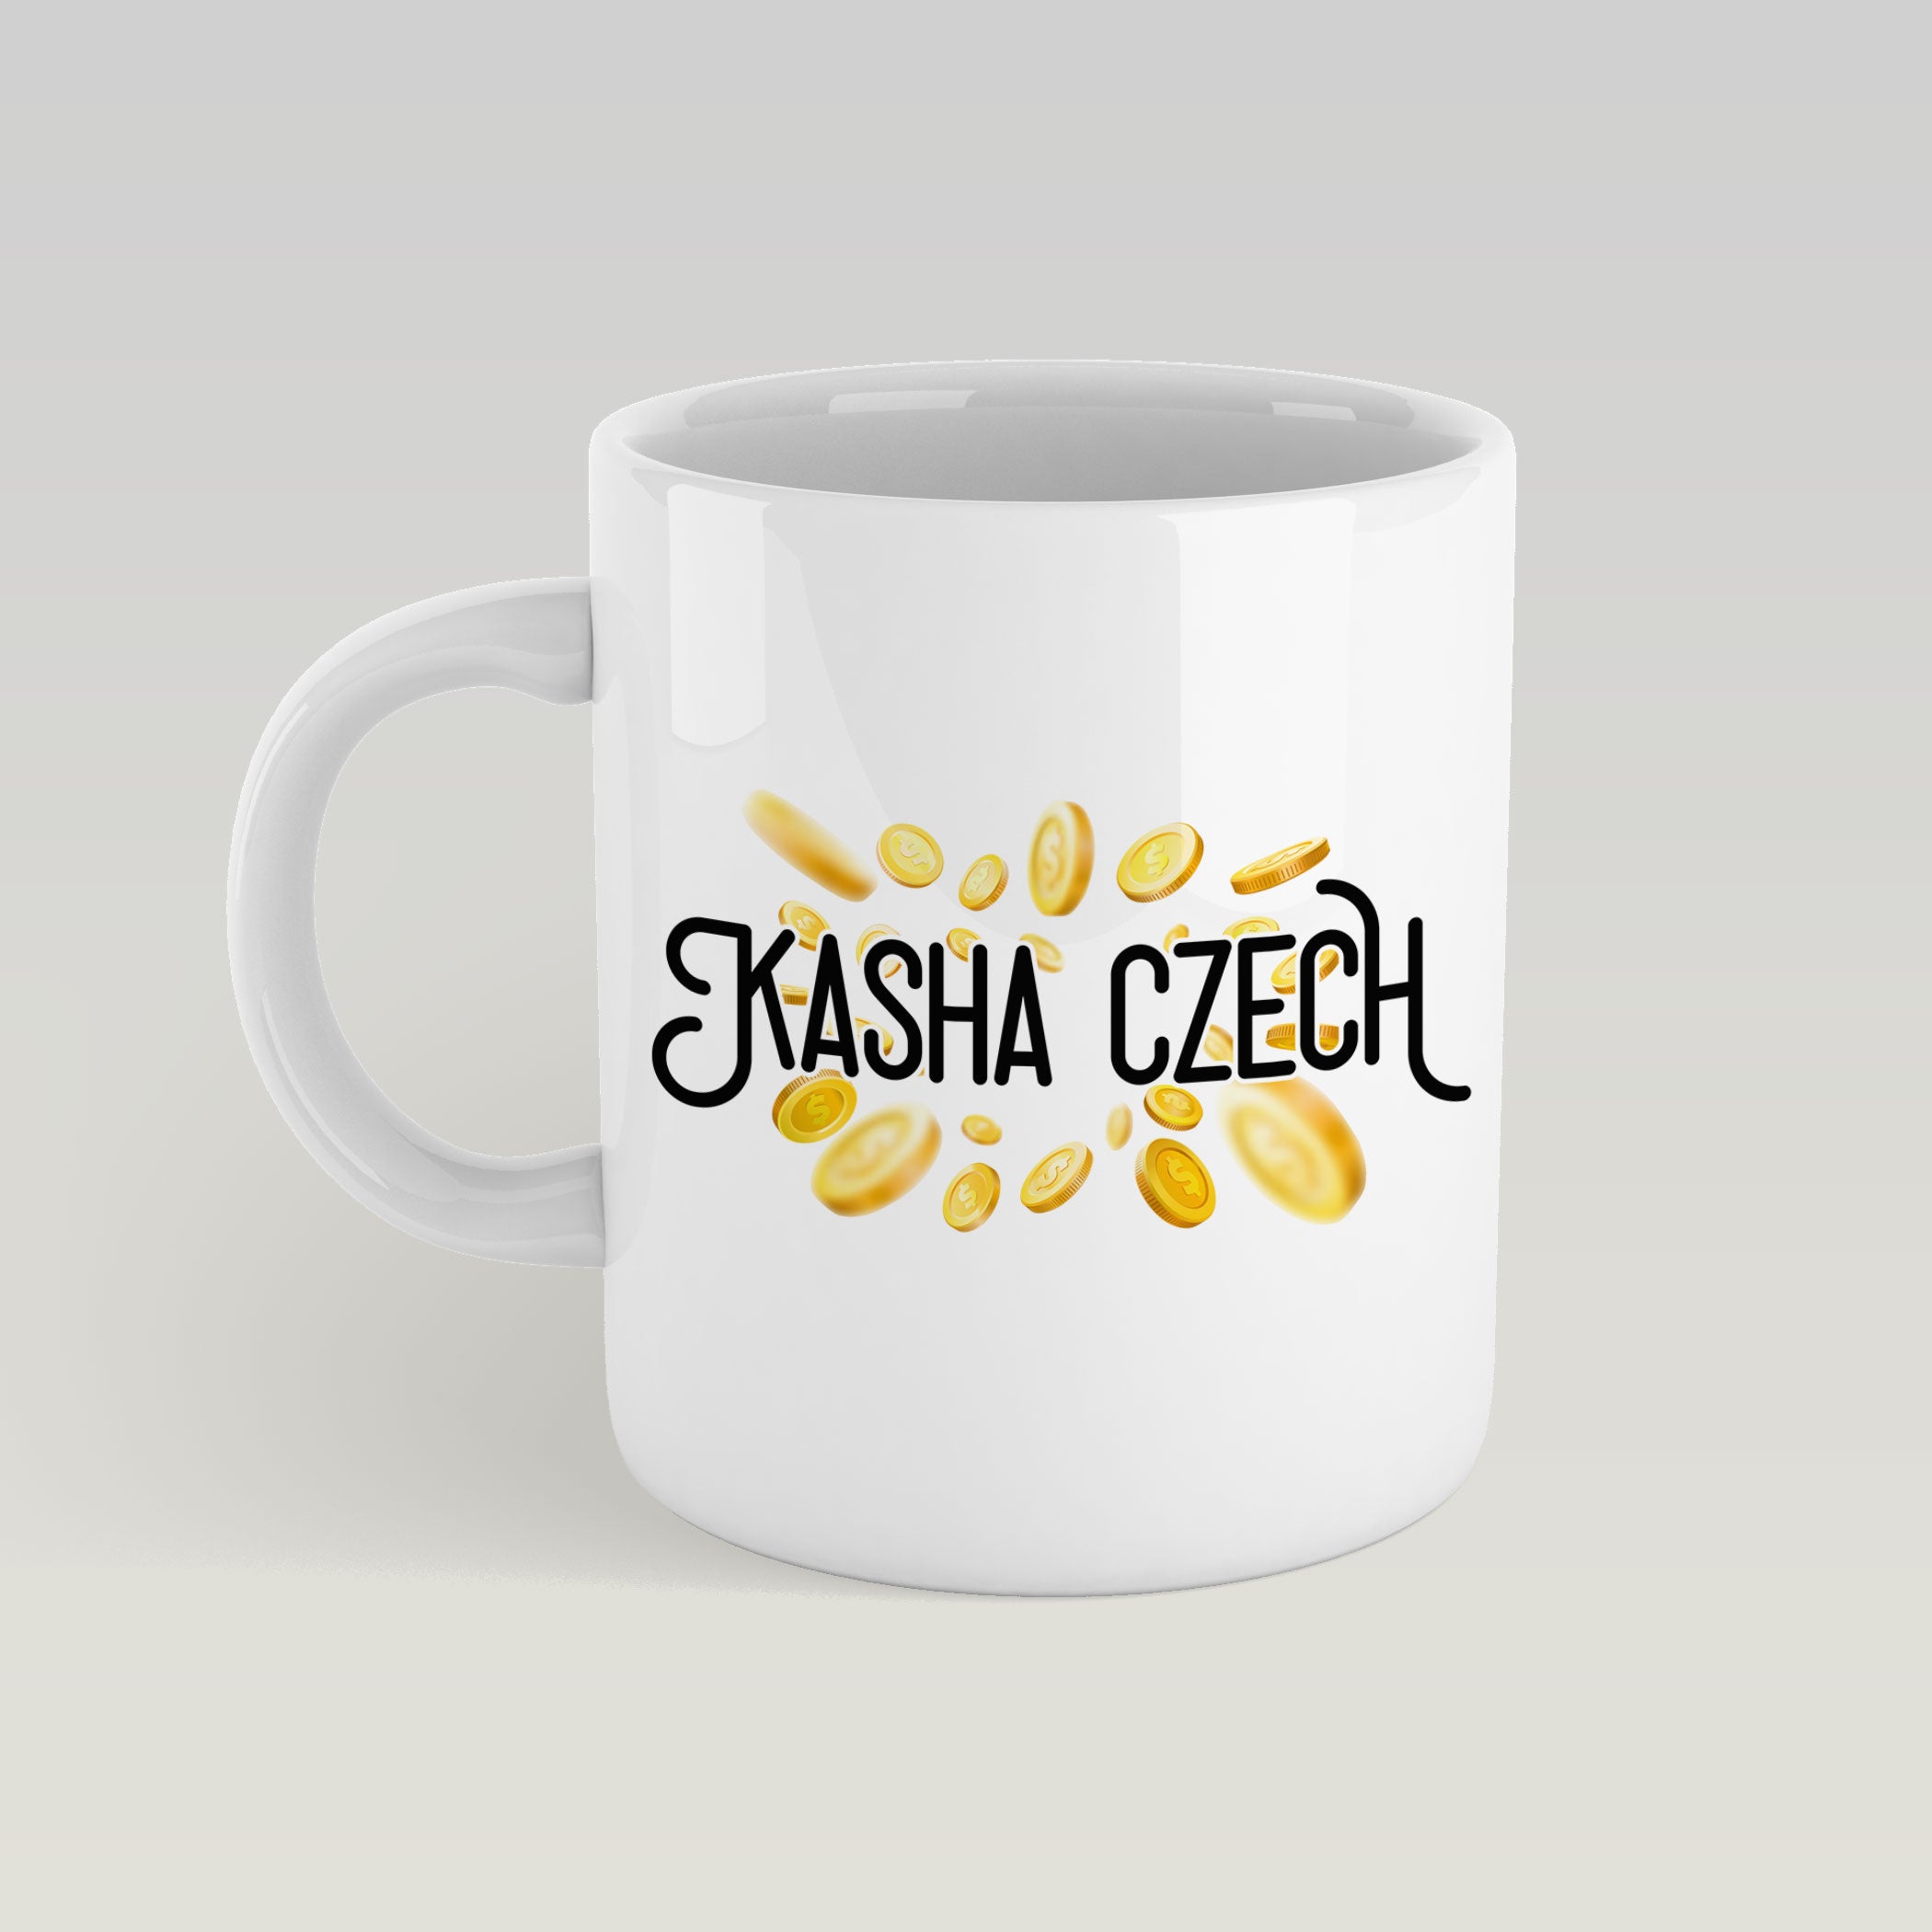 Kasha Czech - Throw Money Mug